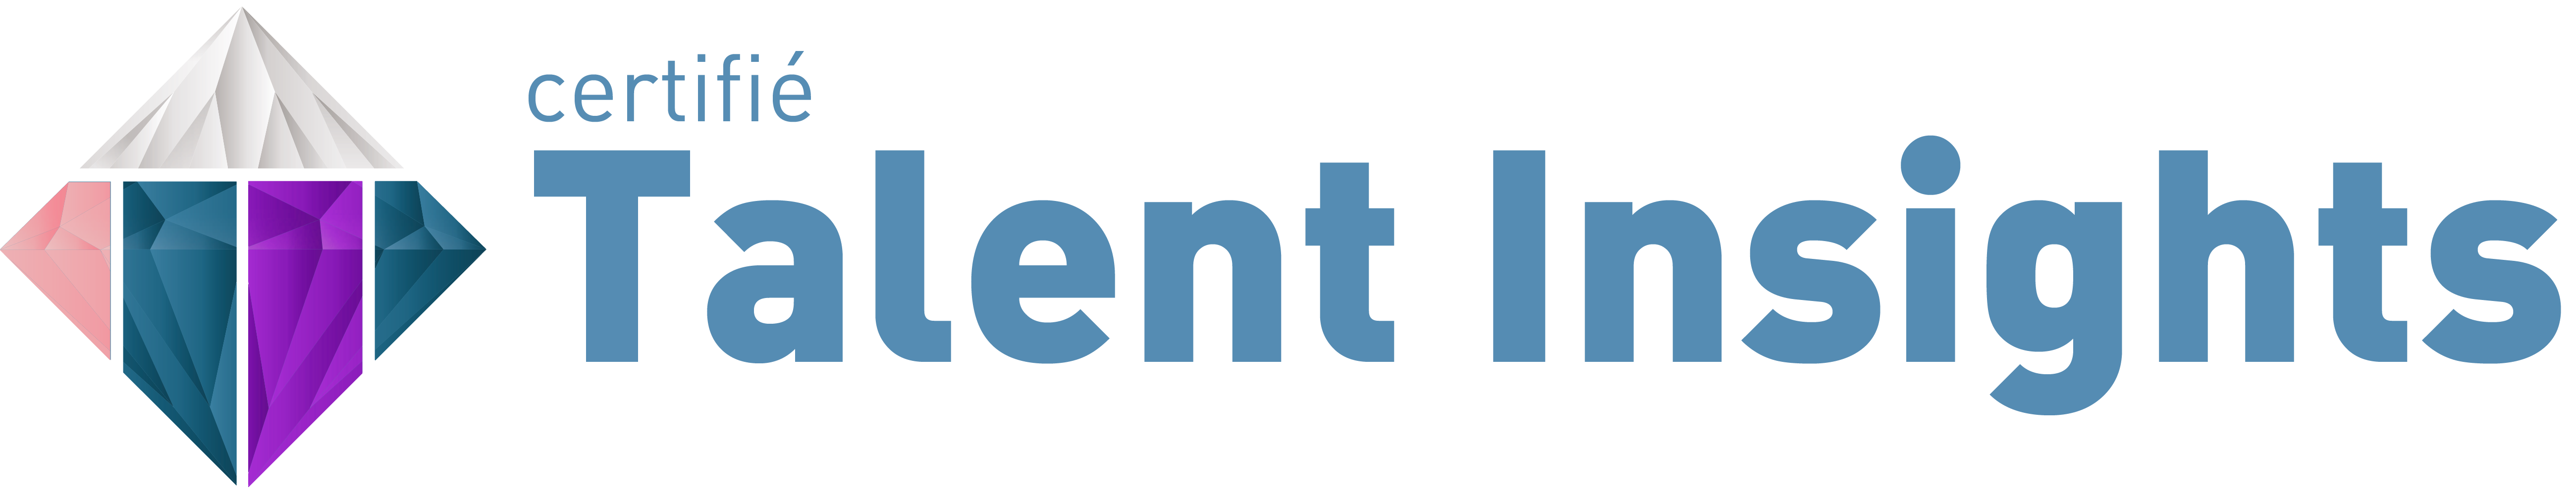 Logo certifié TALENT insight